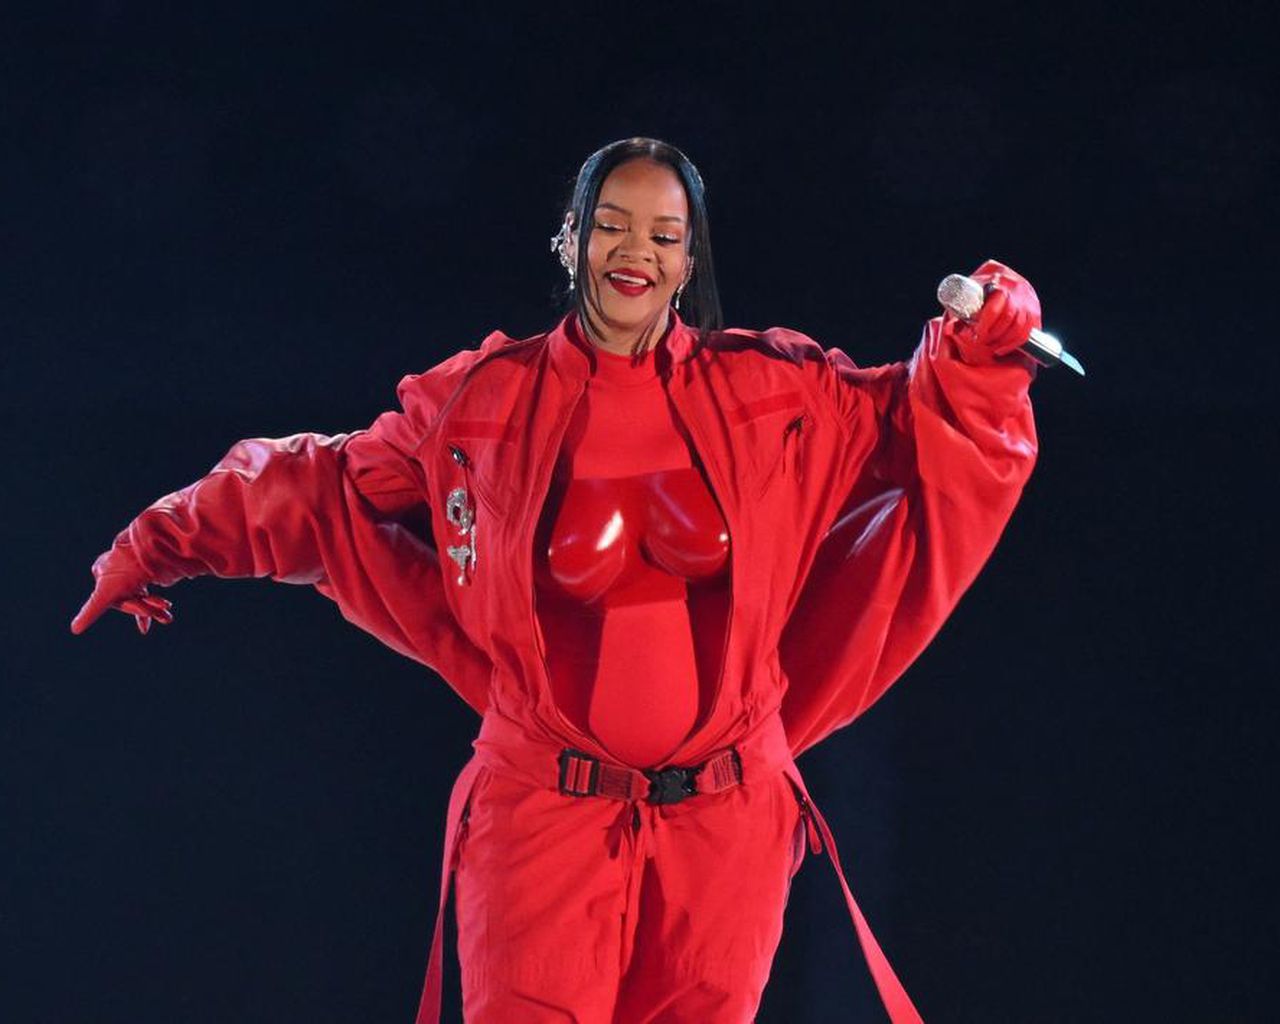 Rihanna's Super Bowl show and pregnancy reveal